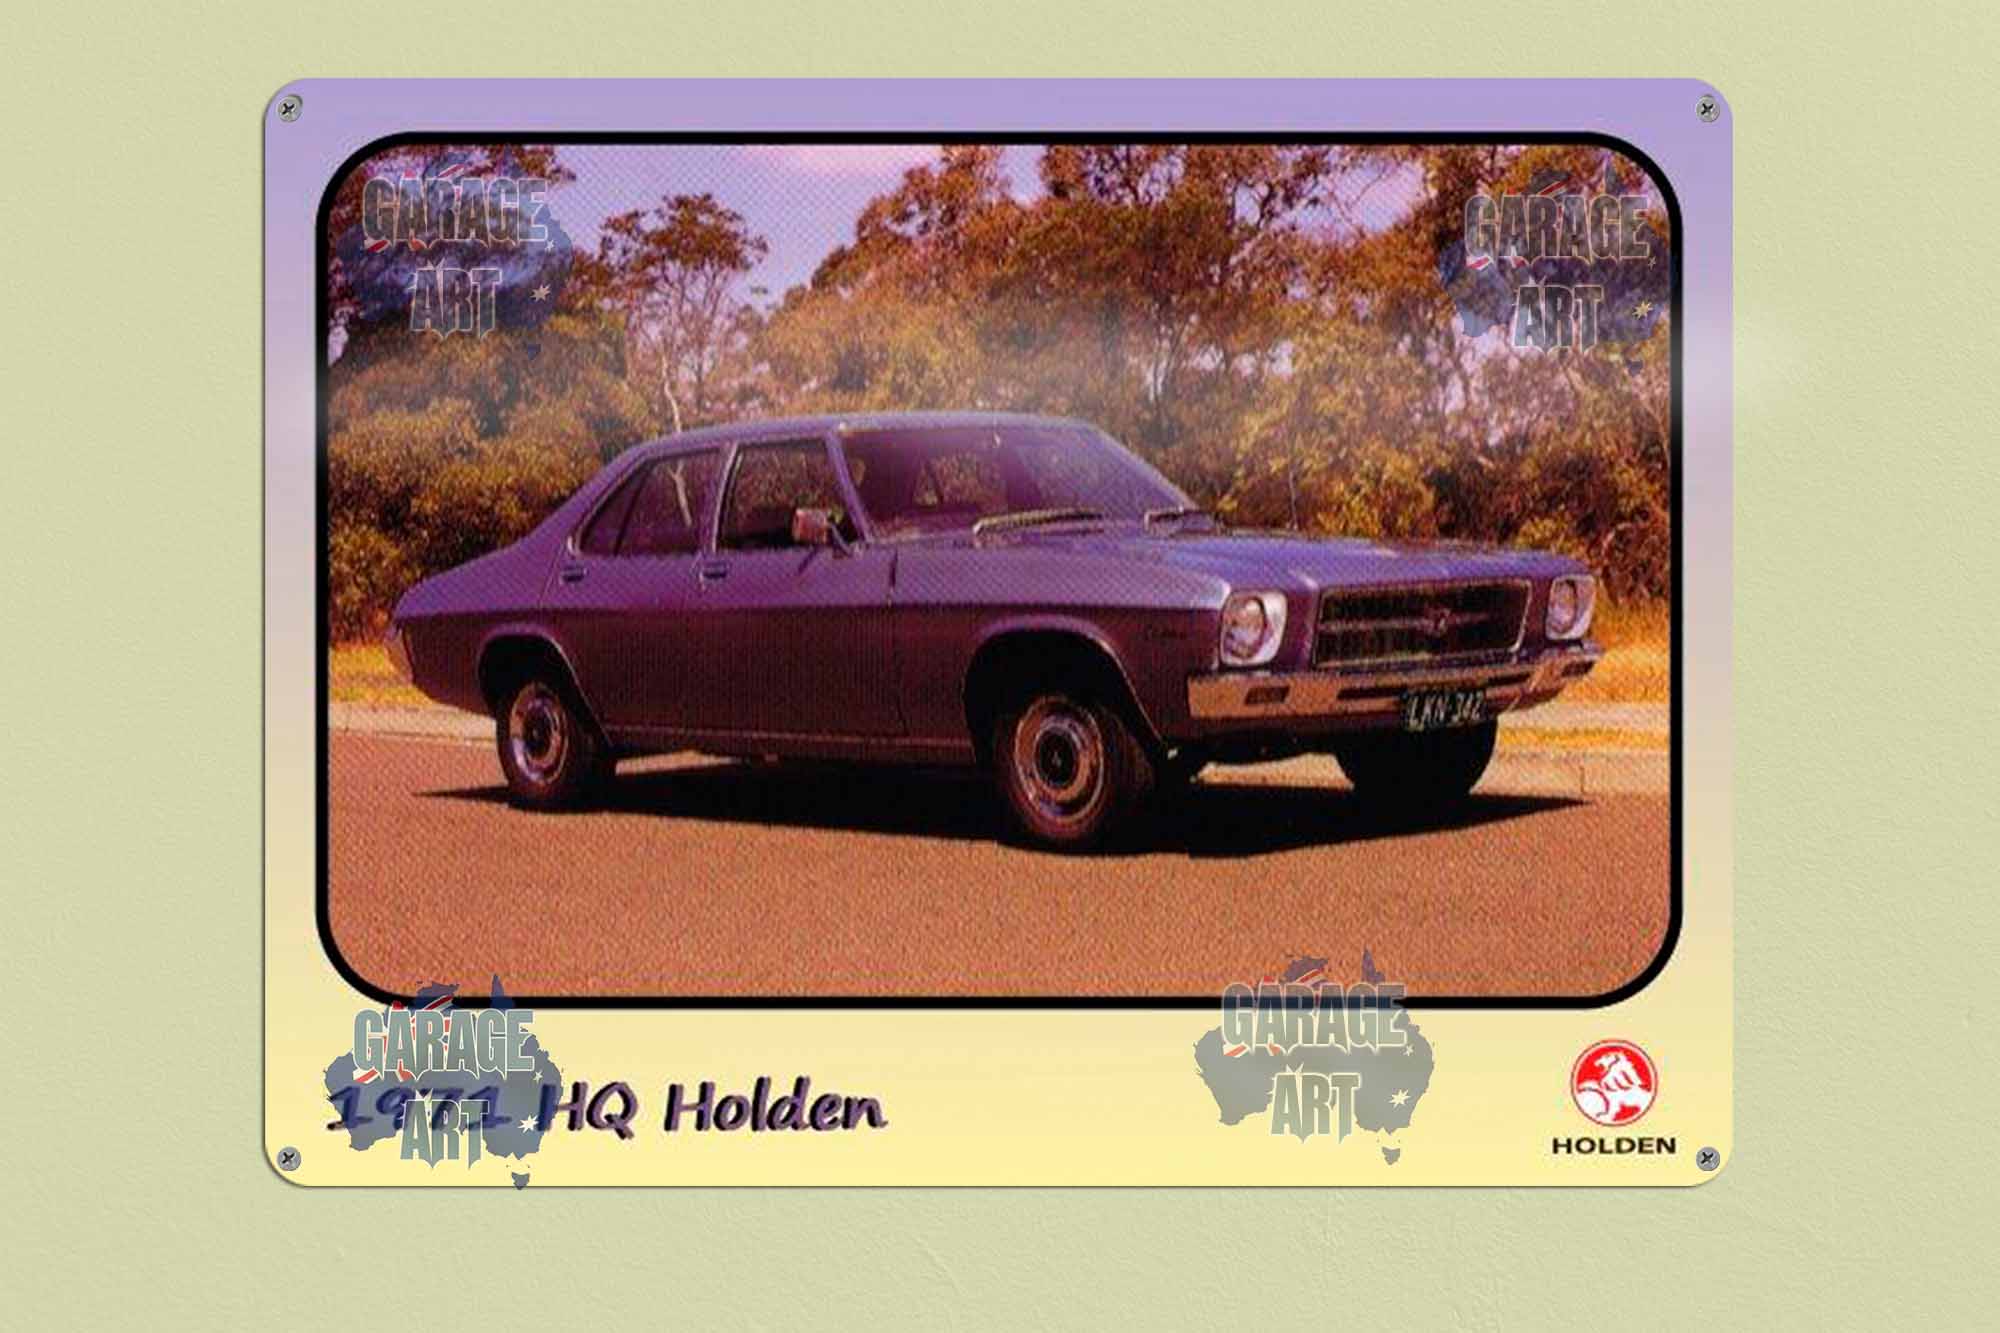 1971 HQ Holden Tin Sign freeshipping - garageartaustralia